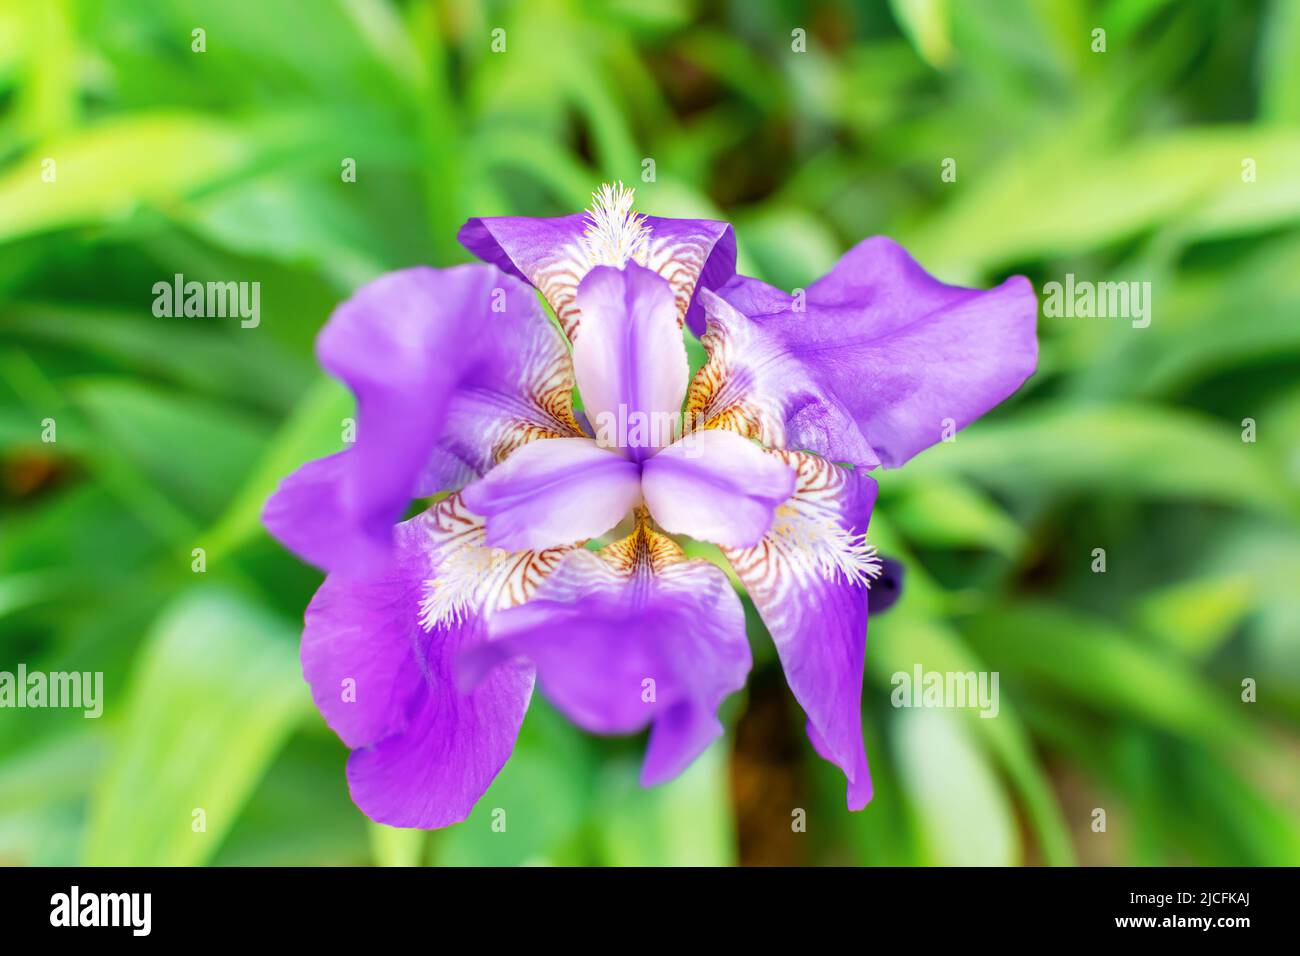 Iris de orquidea fotografías e imágenes de alta resolución - Alamy